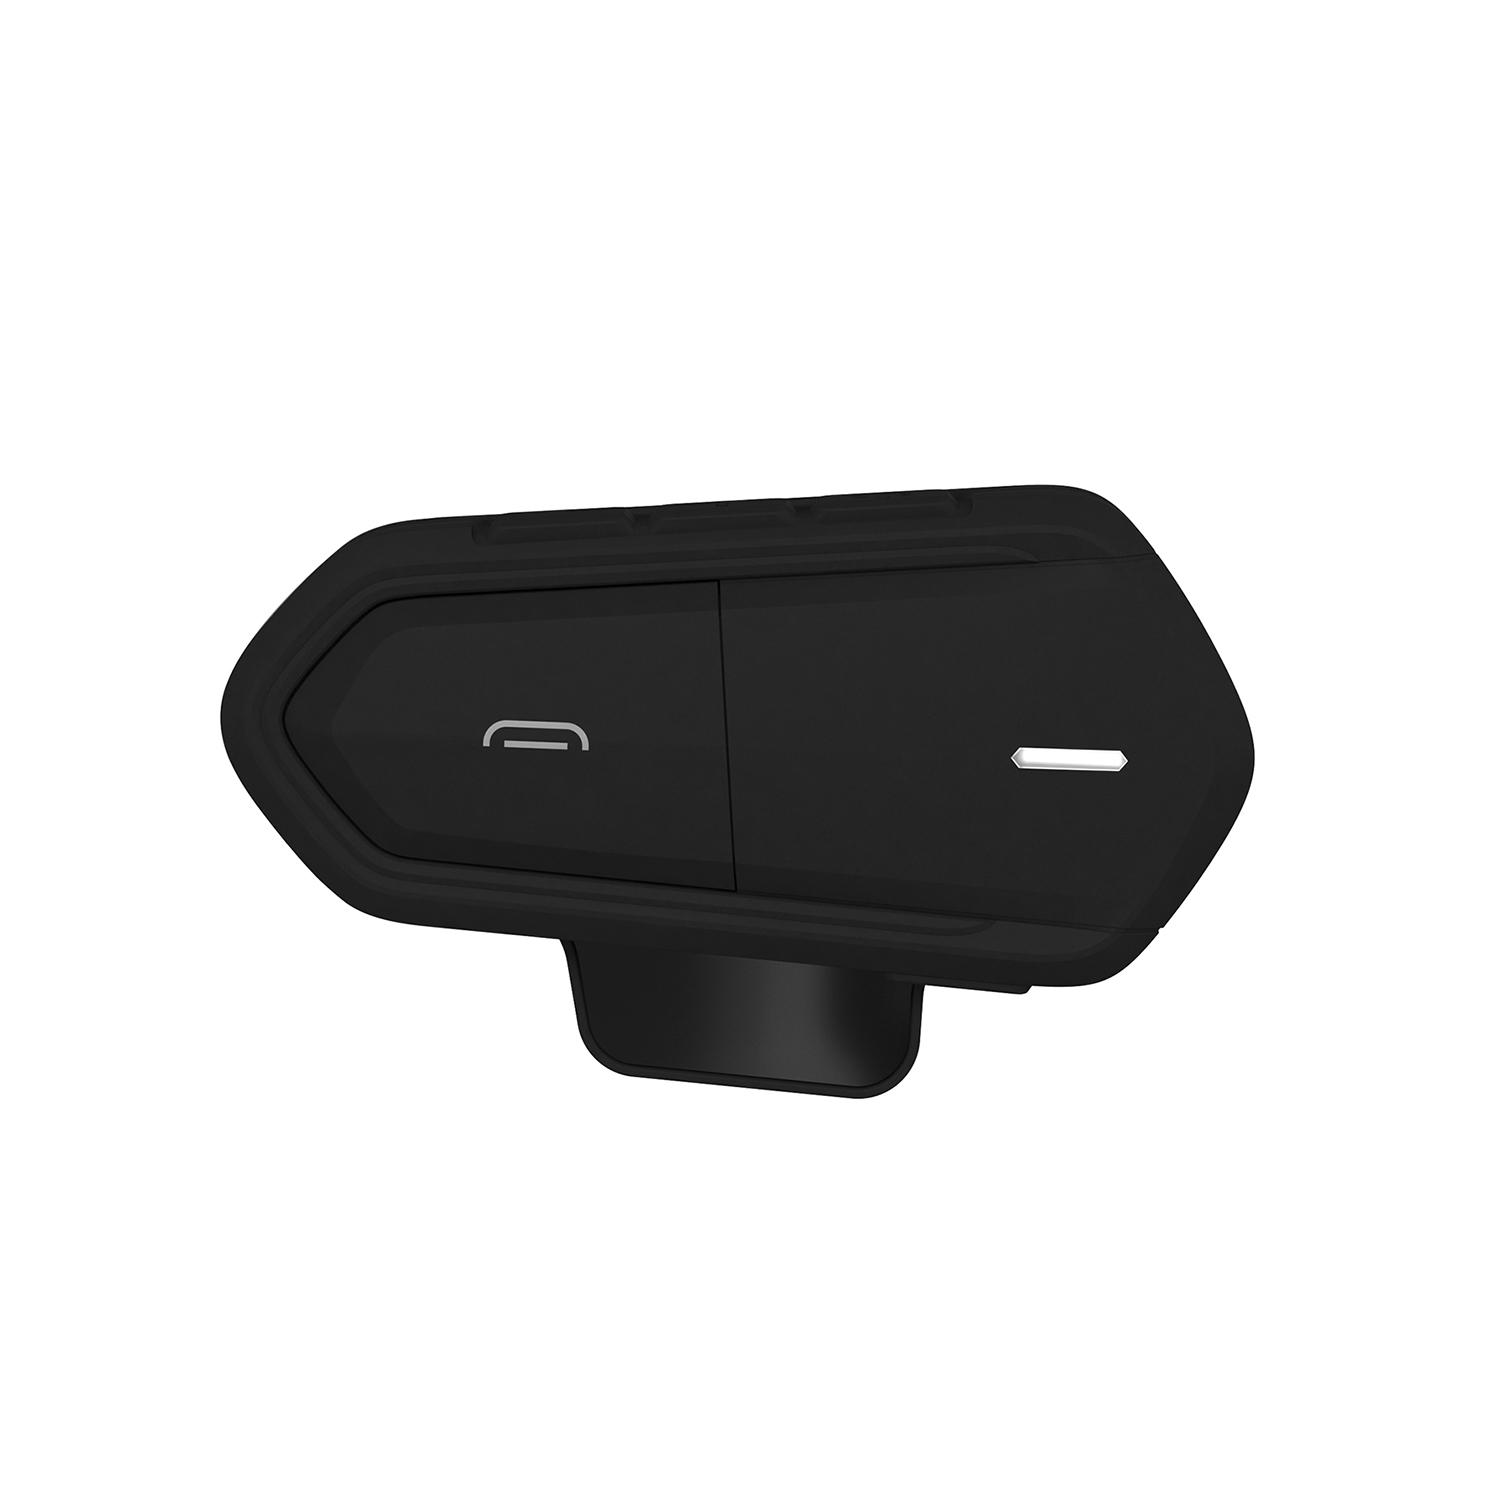 QTBE6 1000M Motorcycle Helmet Intercom Wireless with Bluetooth Function FM Headset Walkie-Talkie Black - Auto GoShop